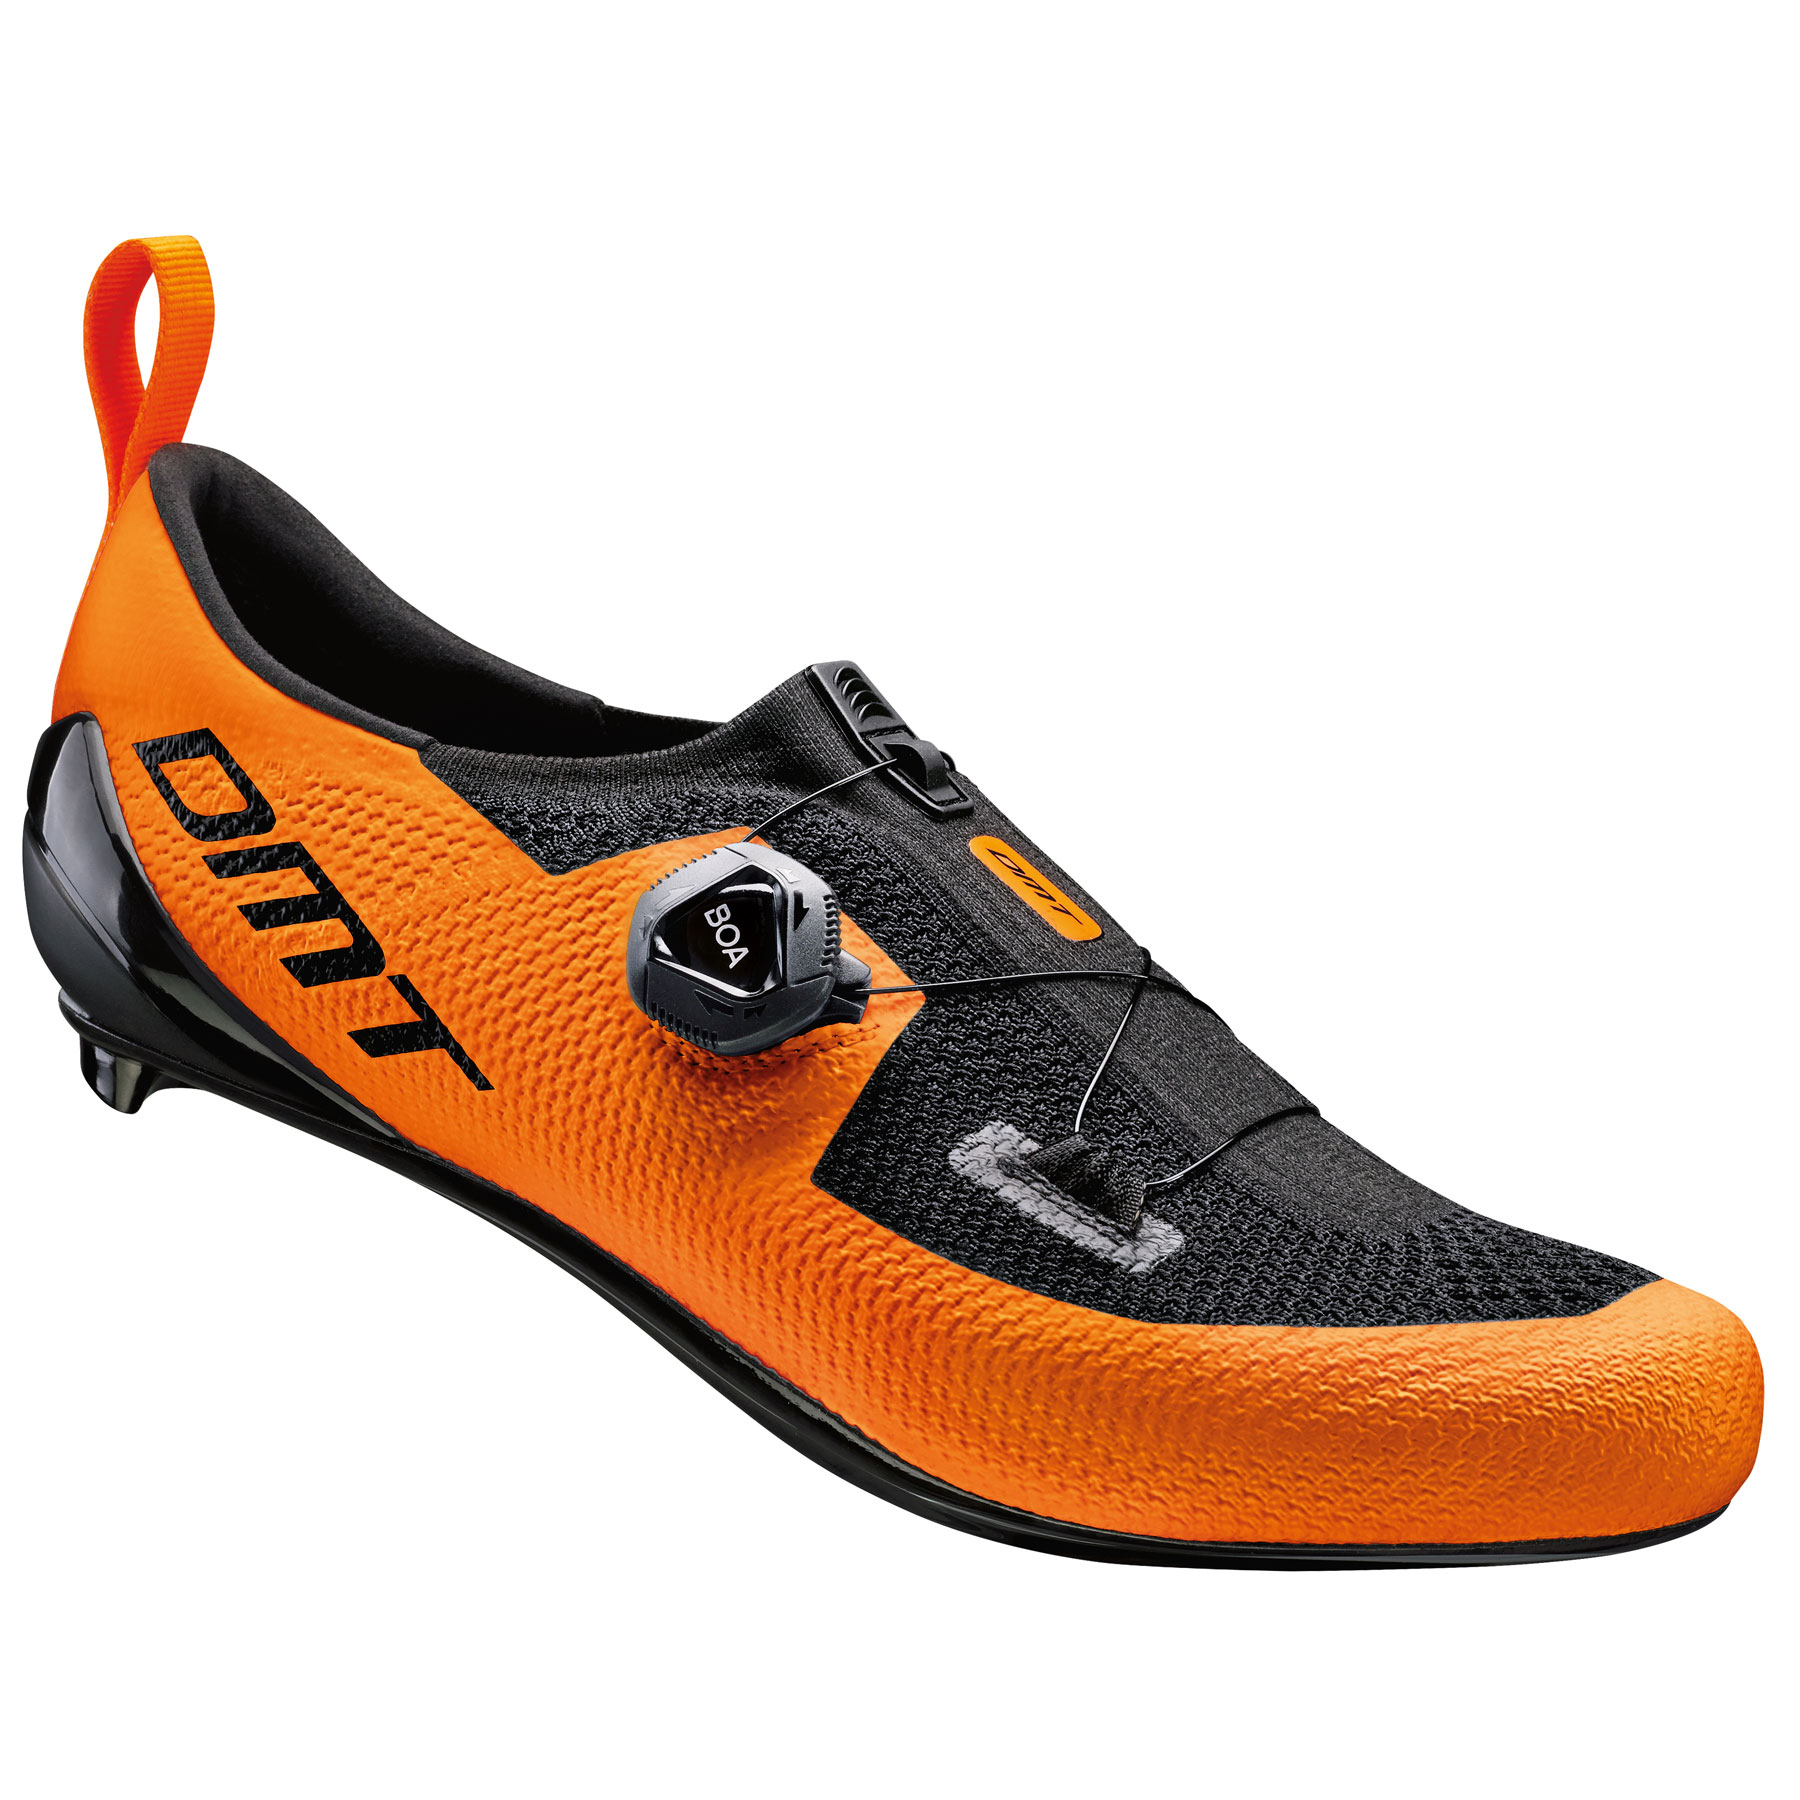 Productfoto van DMT KT1 Triathlon Shoe - orange/black